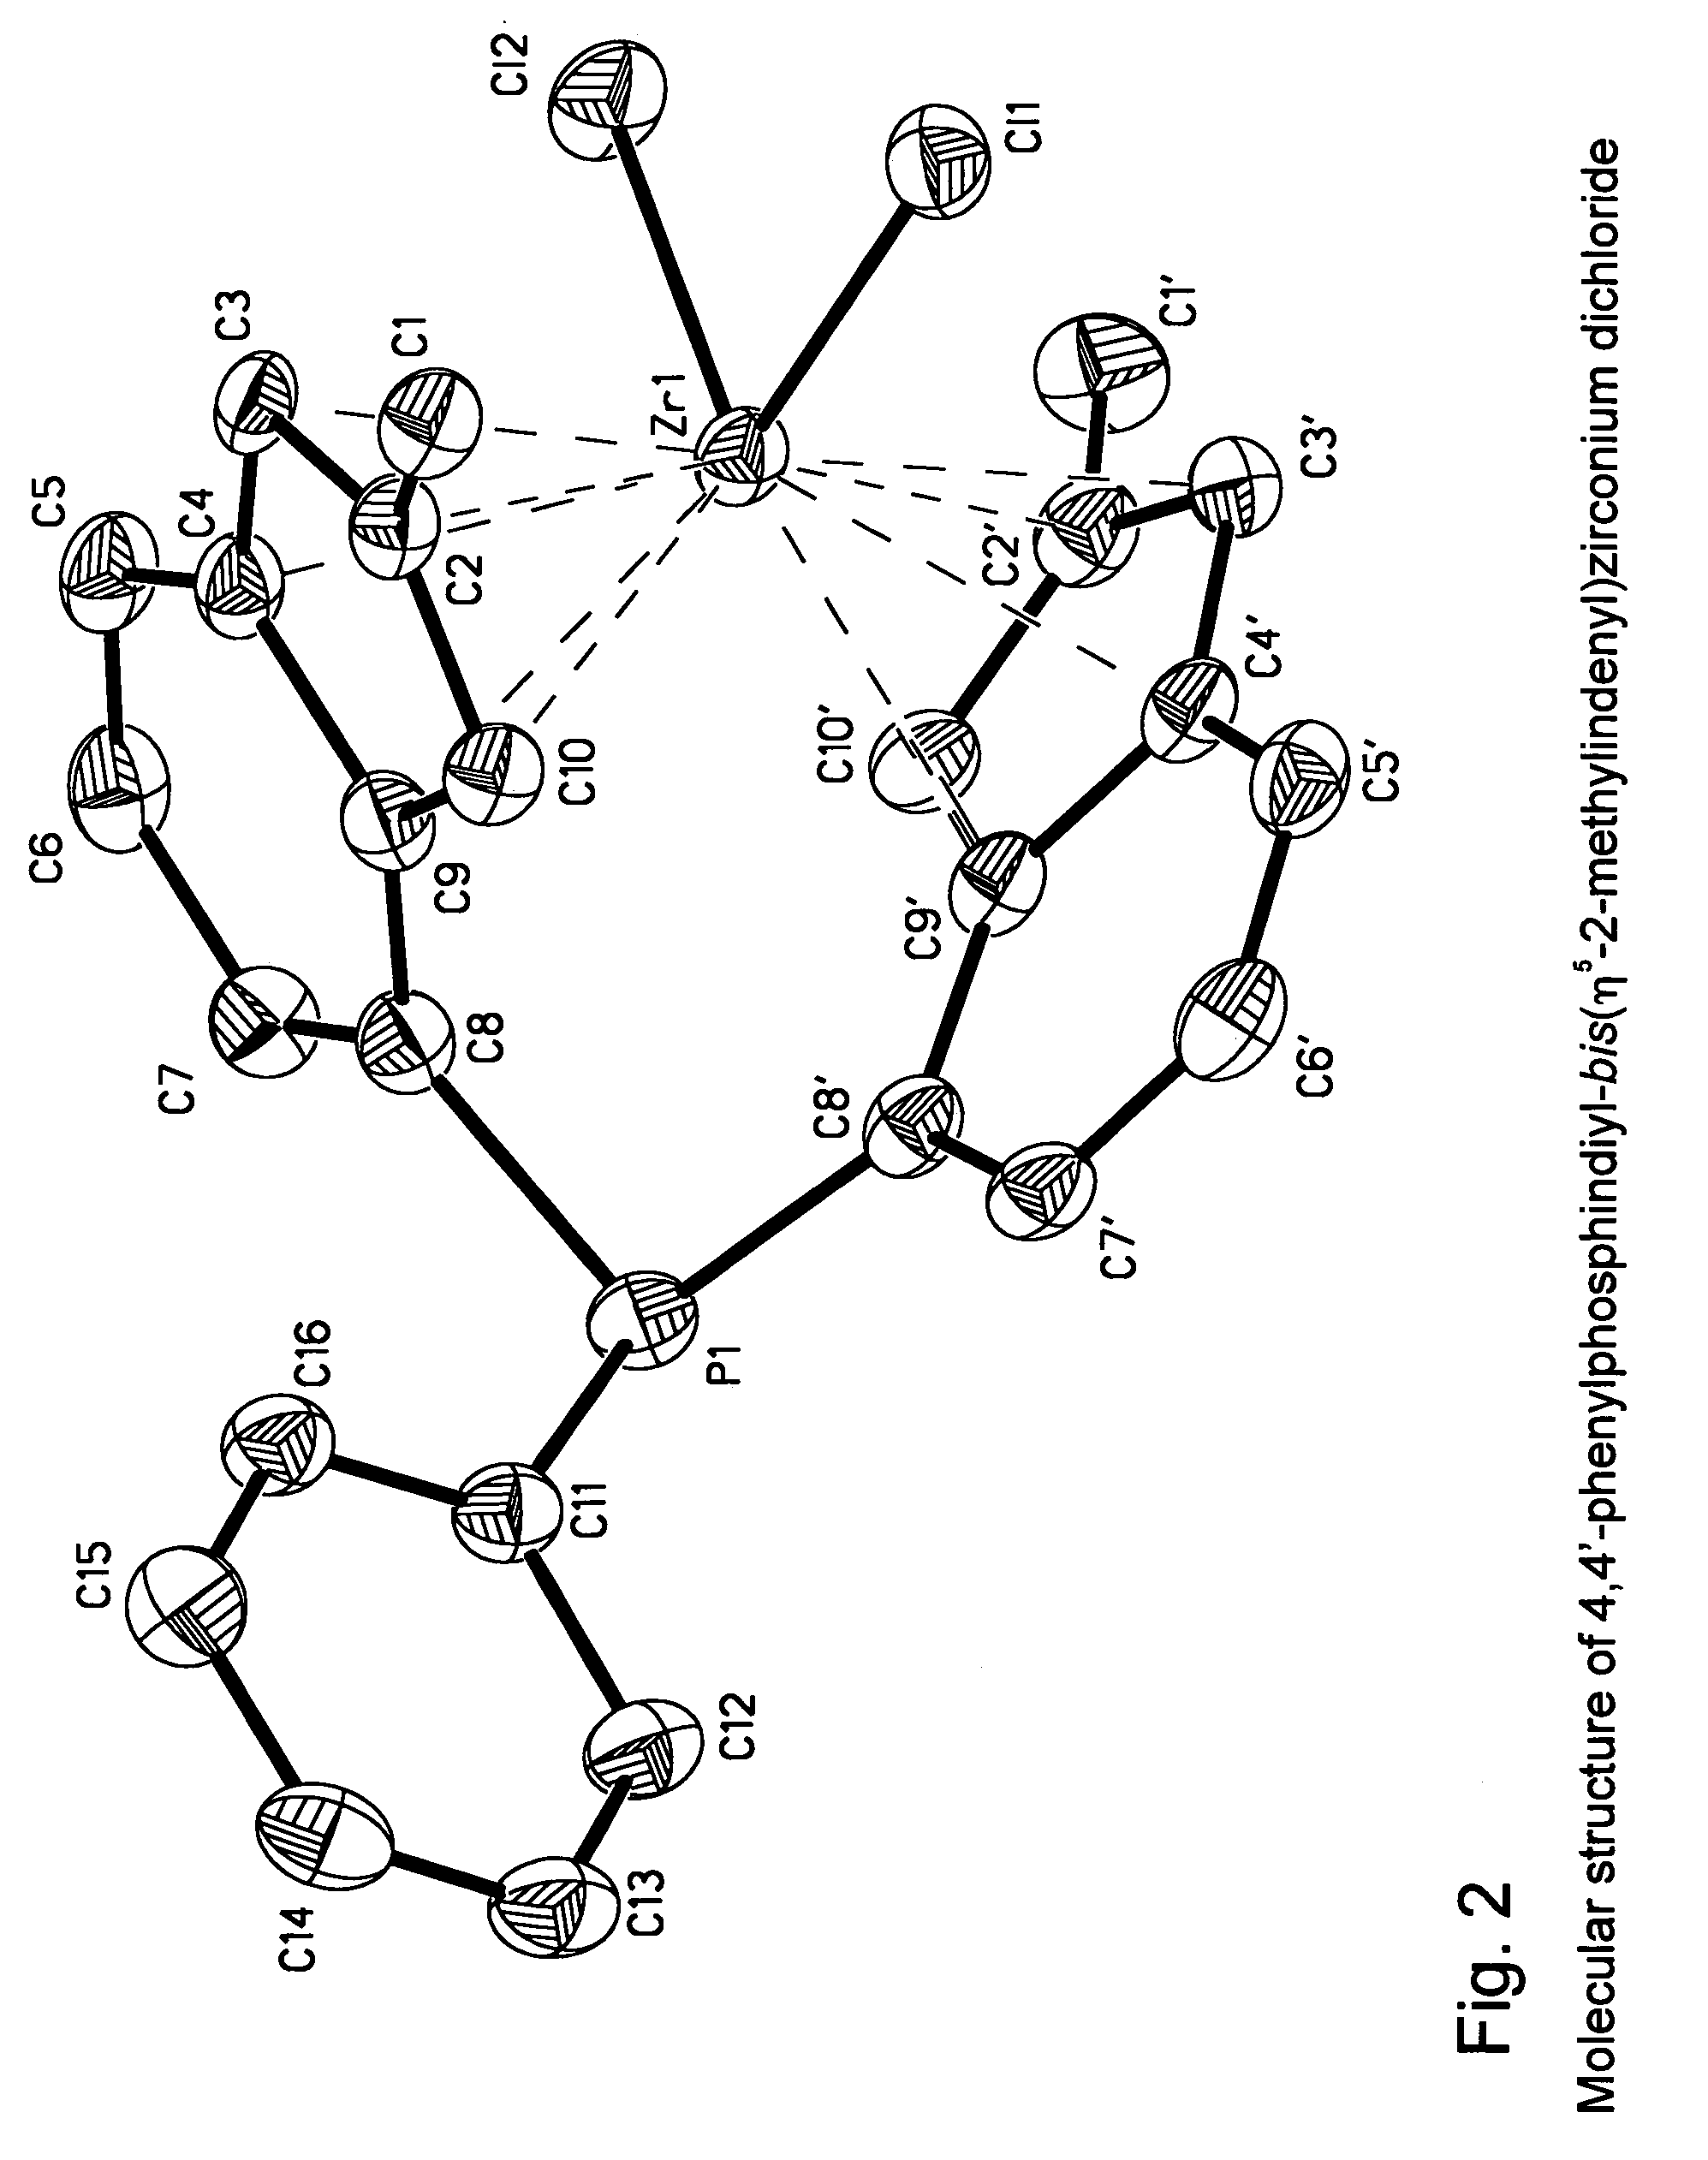 Heteroatom bridged metallocene compounds for olefin polymerization